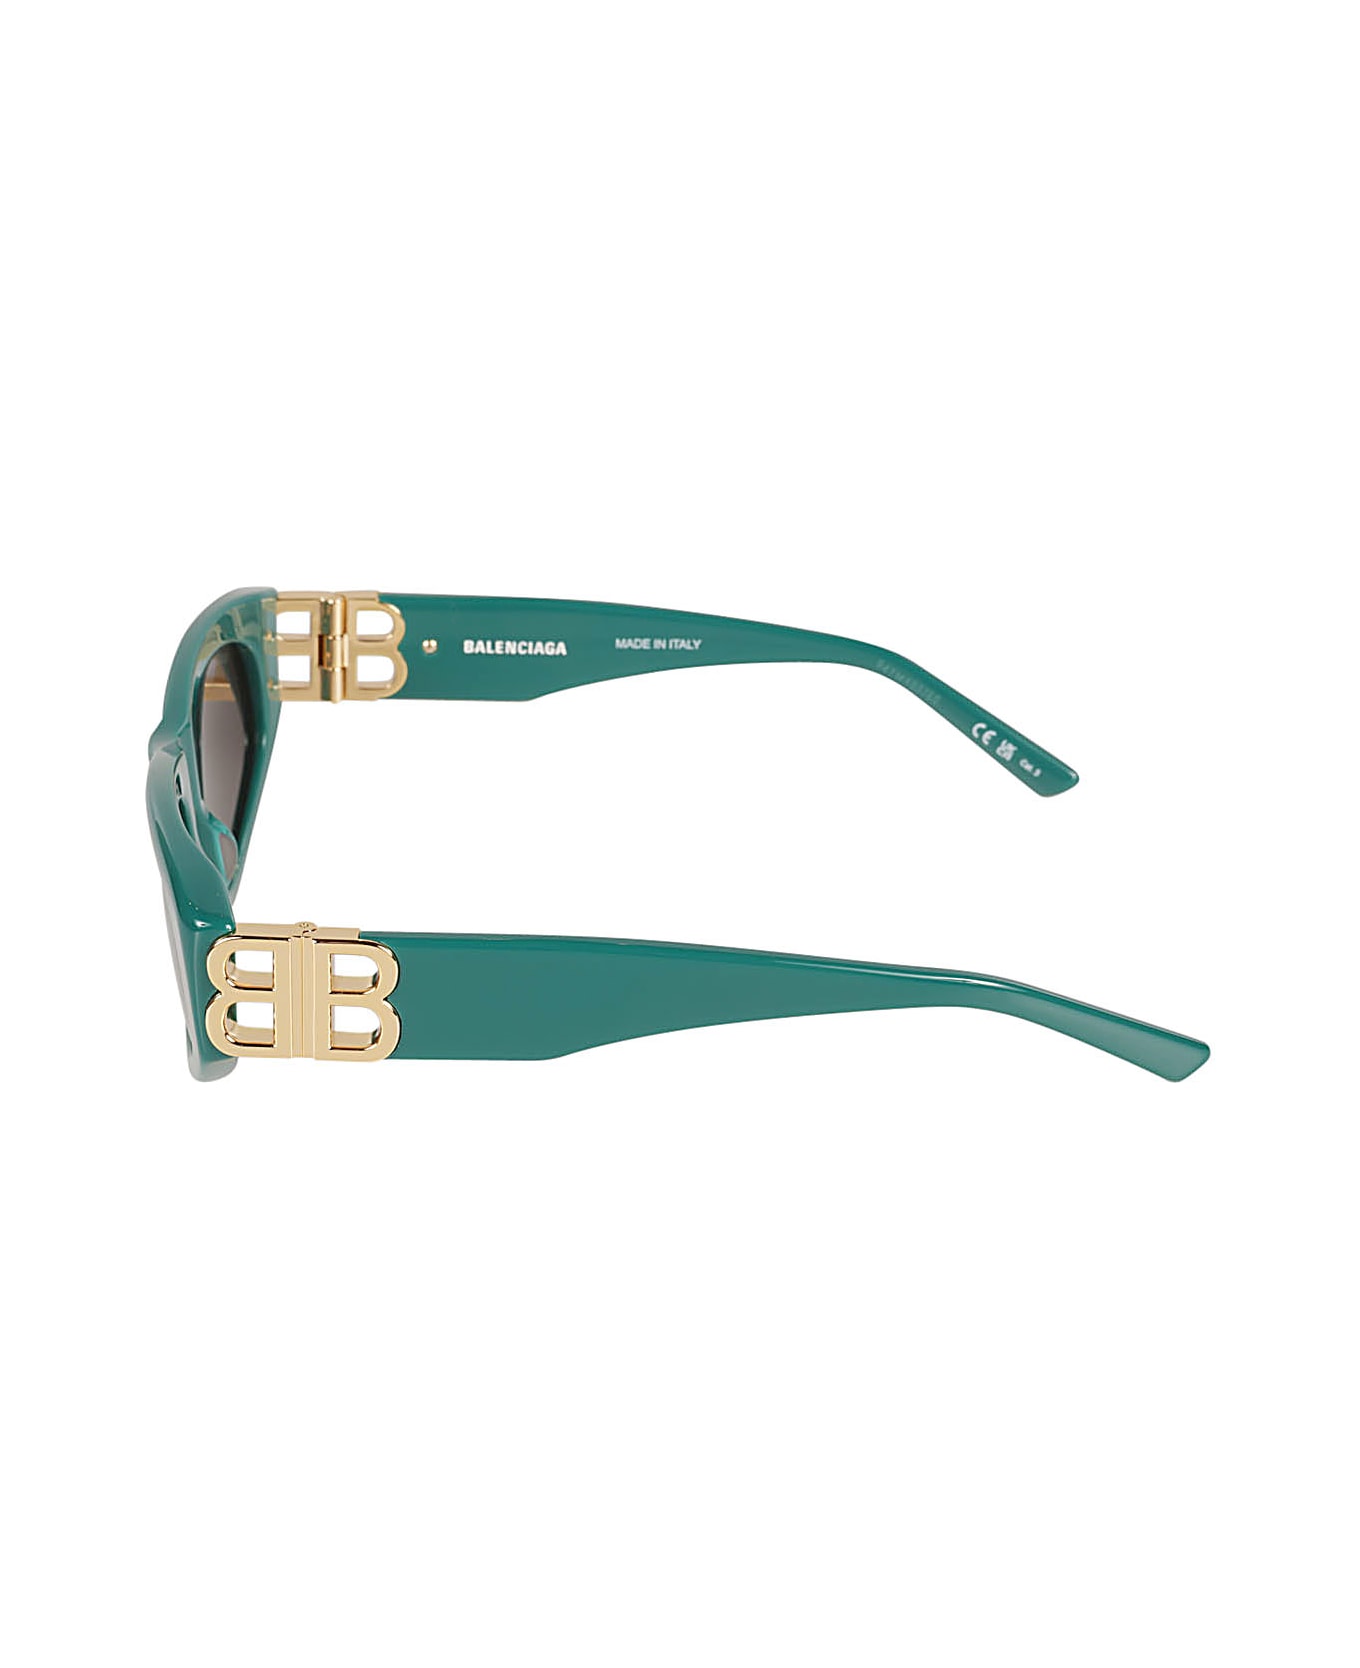 Balenciaga Eyewear Bb Hinge Logo Sunglasses - Green/Gold/Grey サングラス